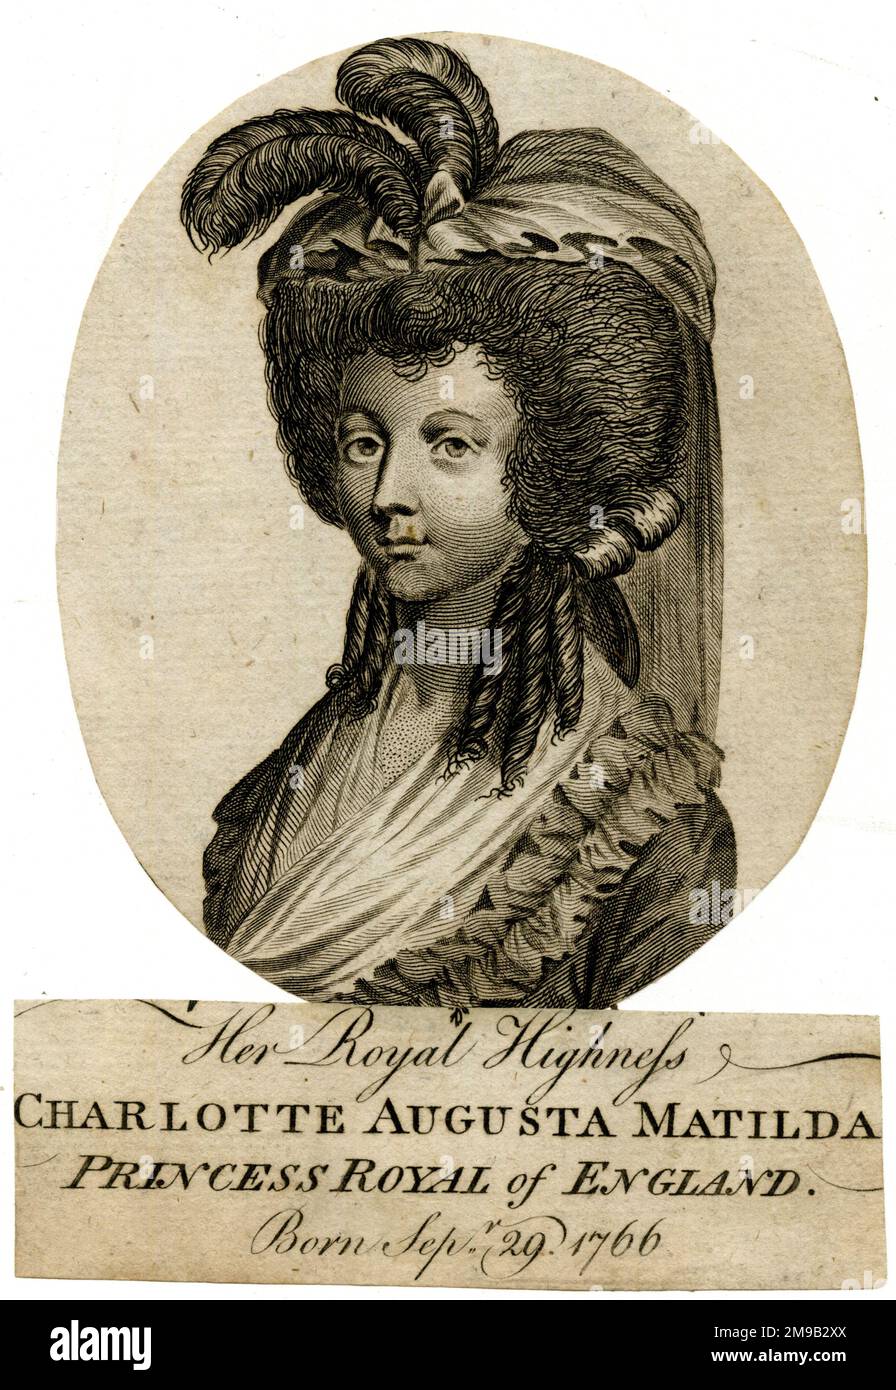 Charlotte Augusta Matilda, Princess Royal of England, elder daughter of King George III. Stock Photo